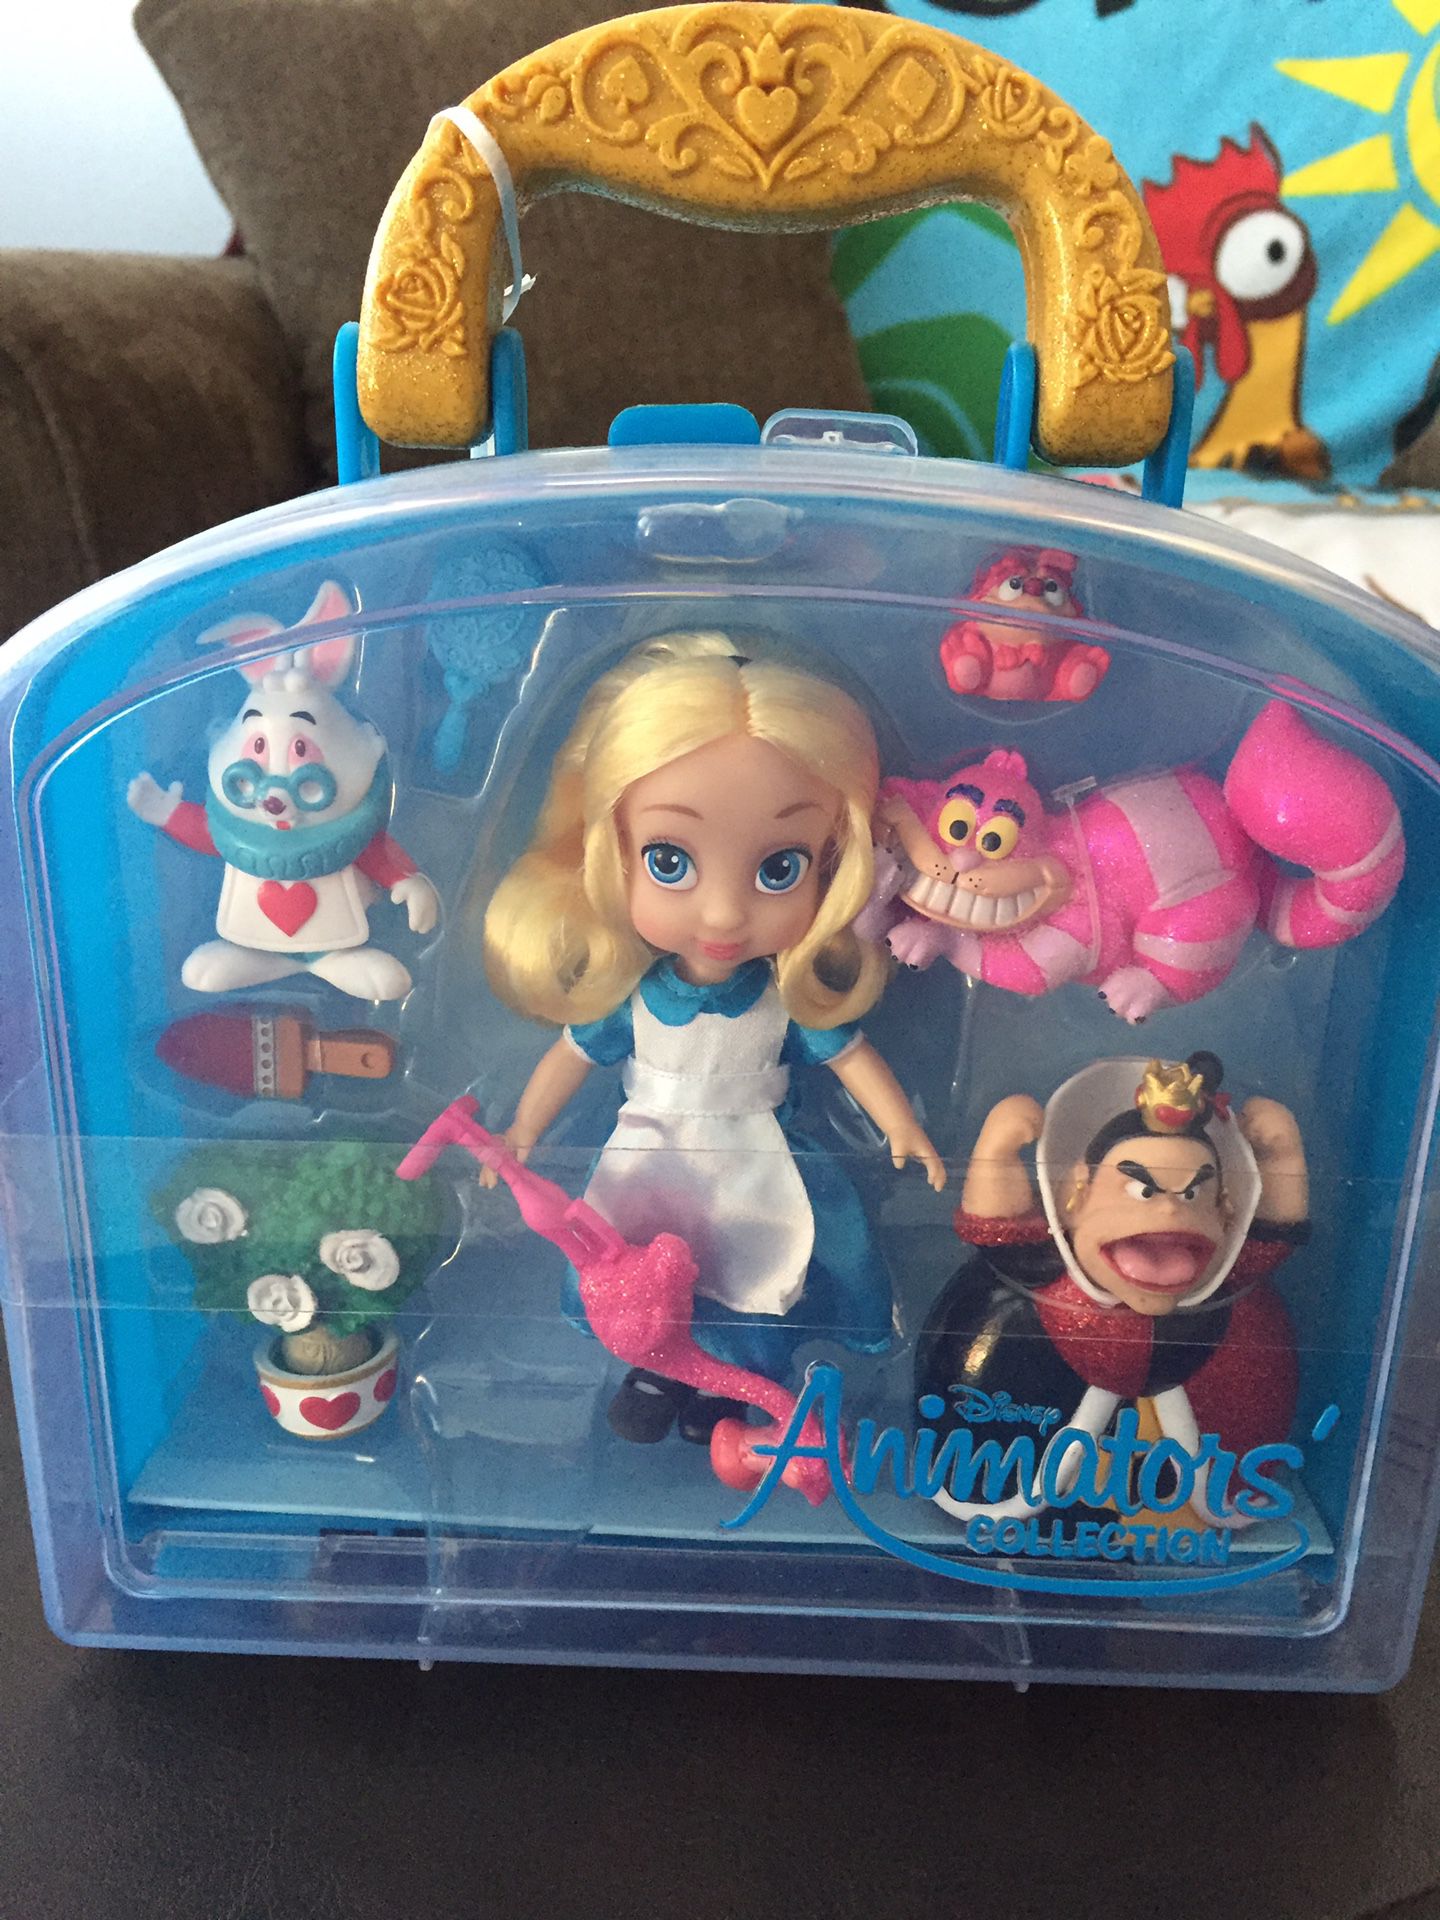 Disney Animators Collection Alice In Wonderland Mini Doll Play Set 